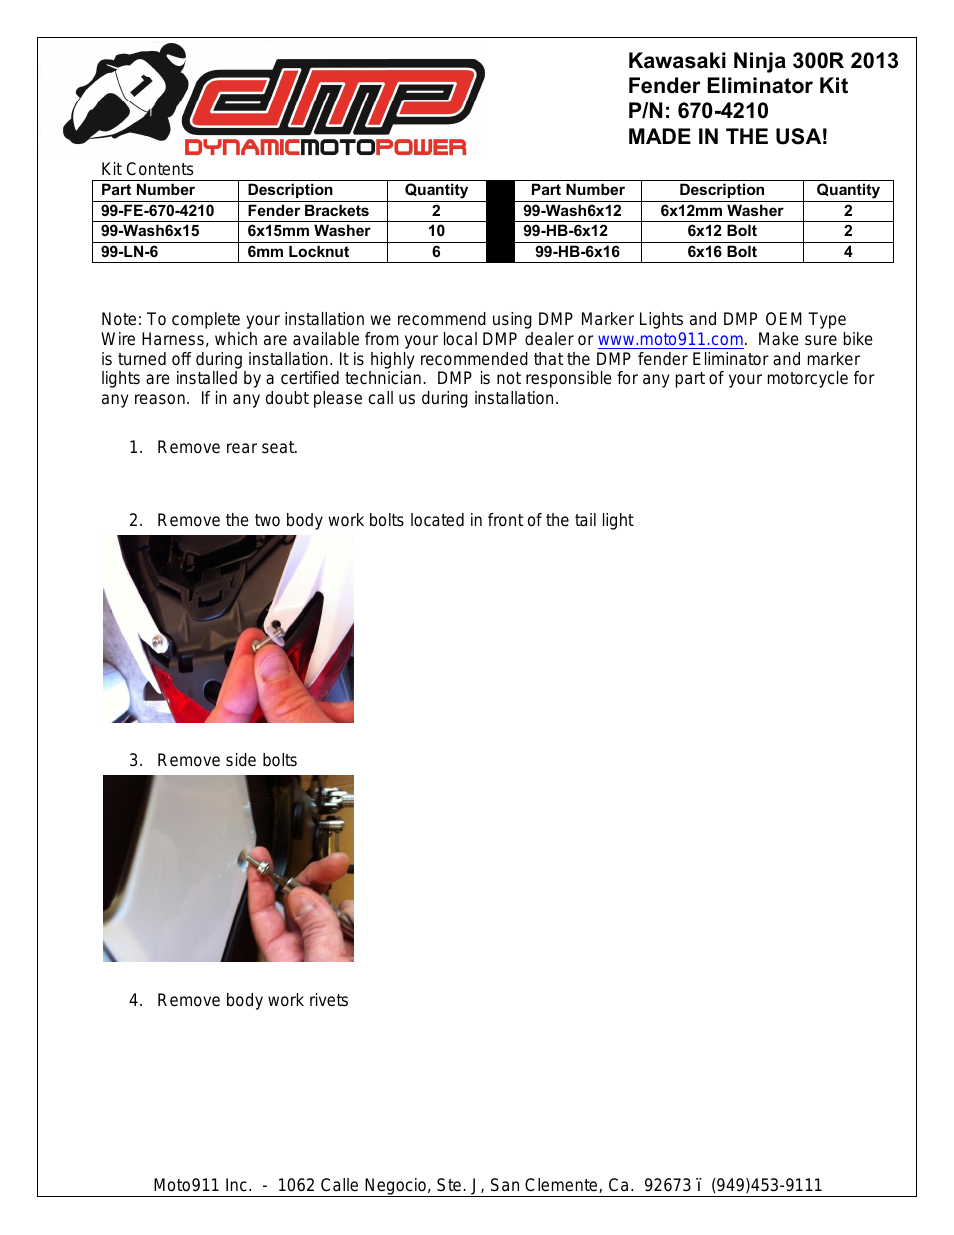 Kawasaki Ninja 300R DMP Fender Eliminator Instructions